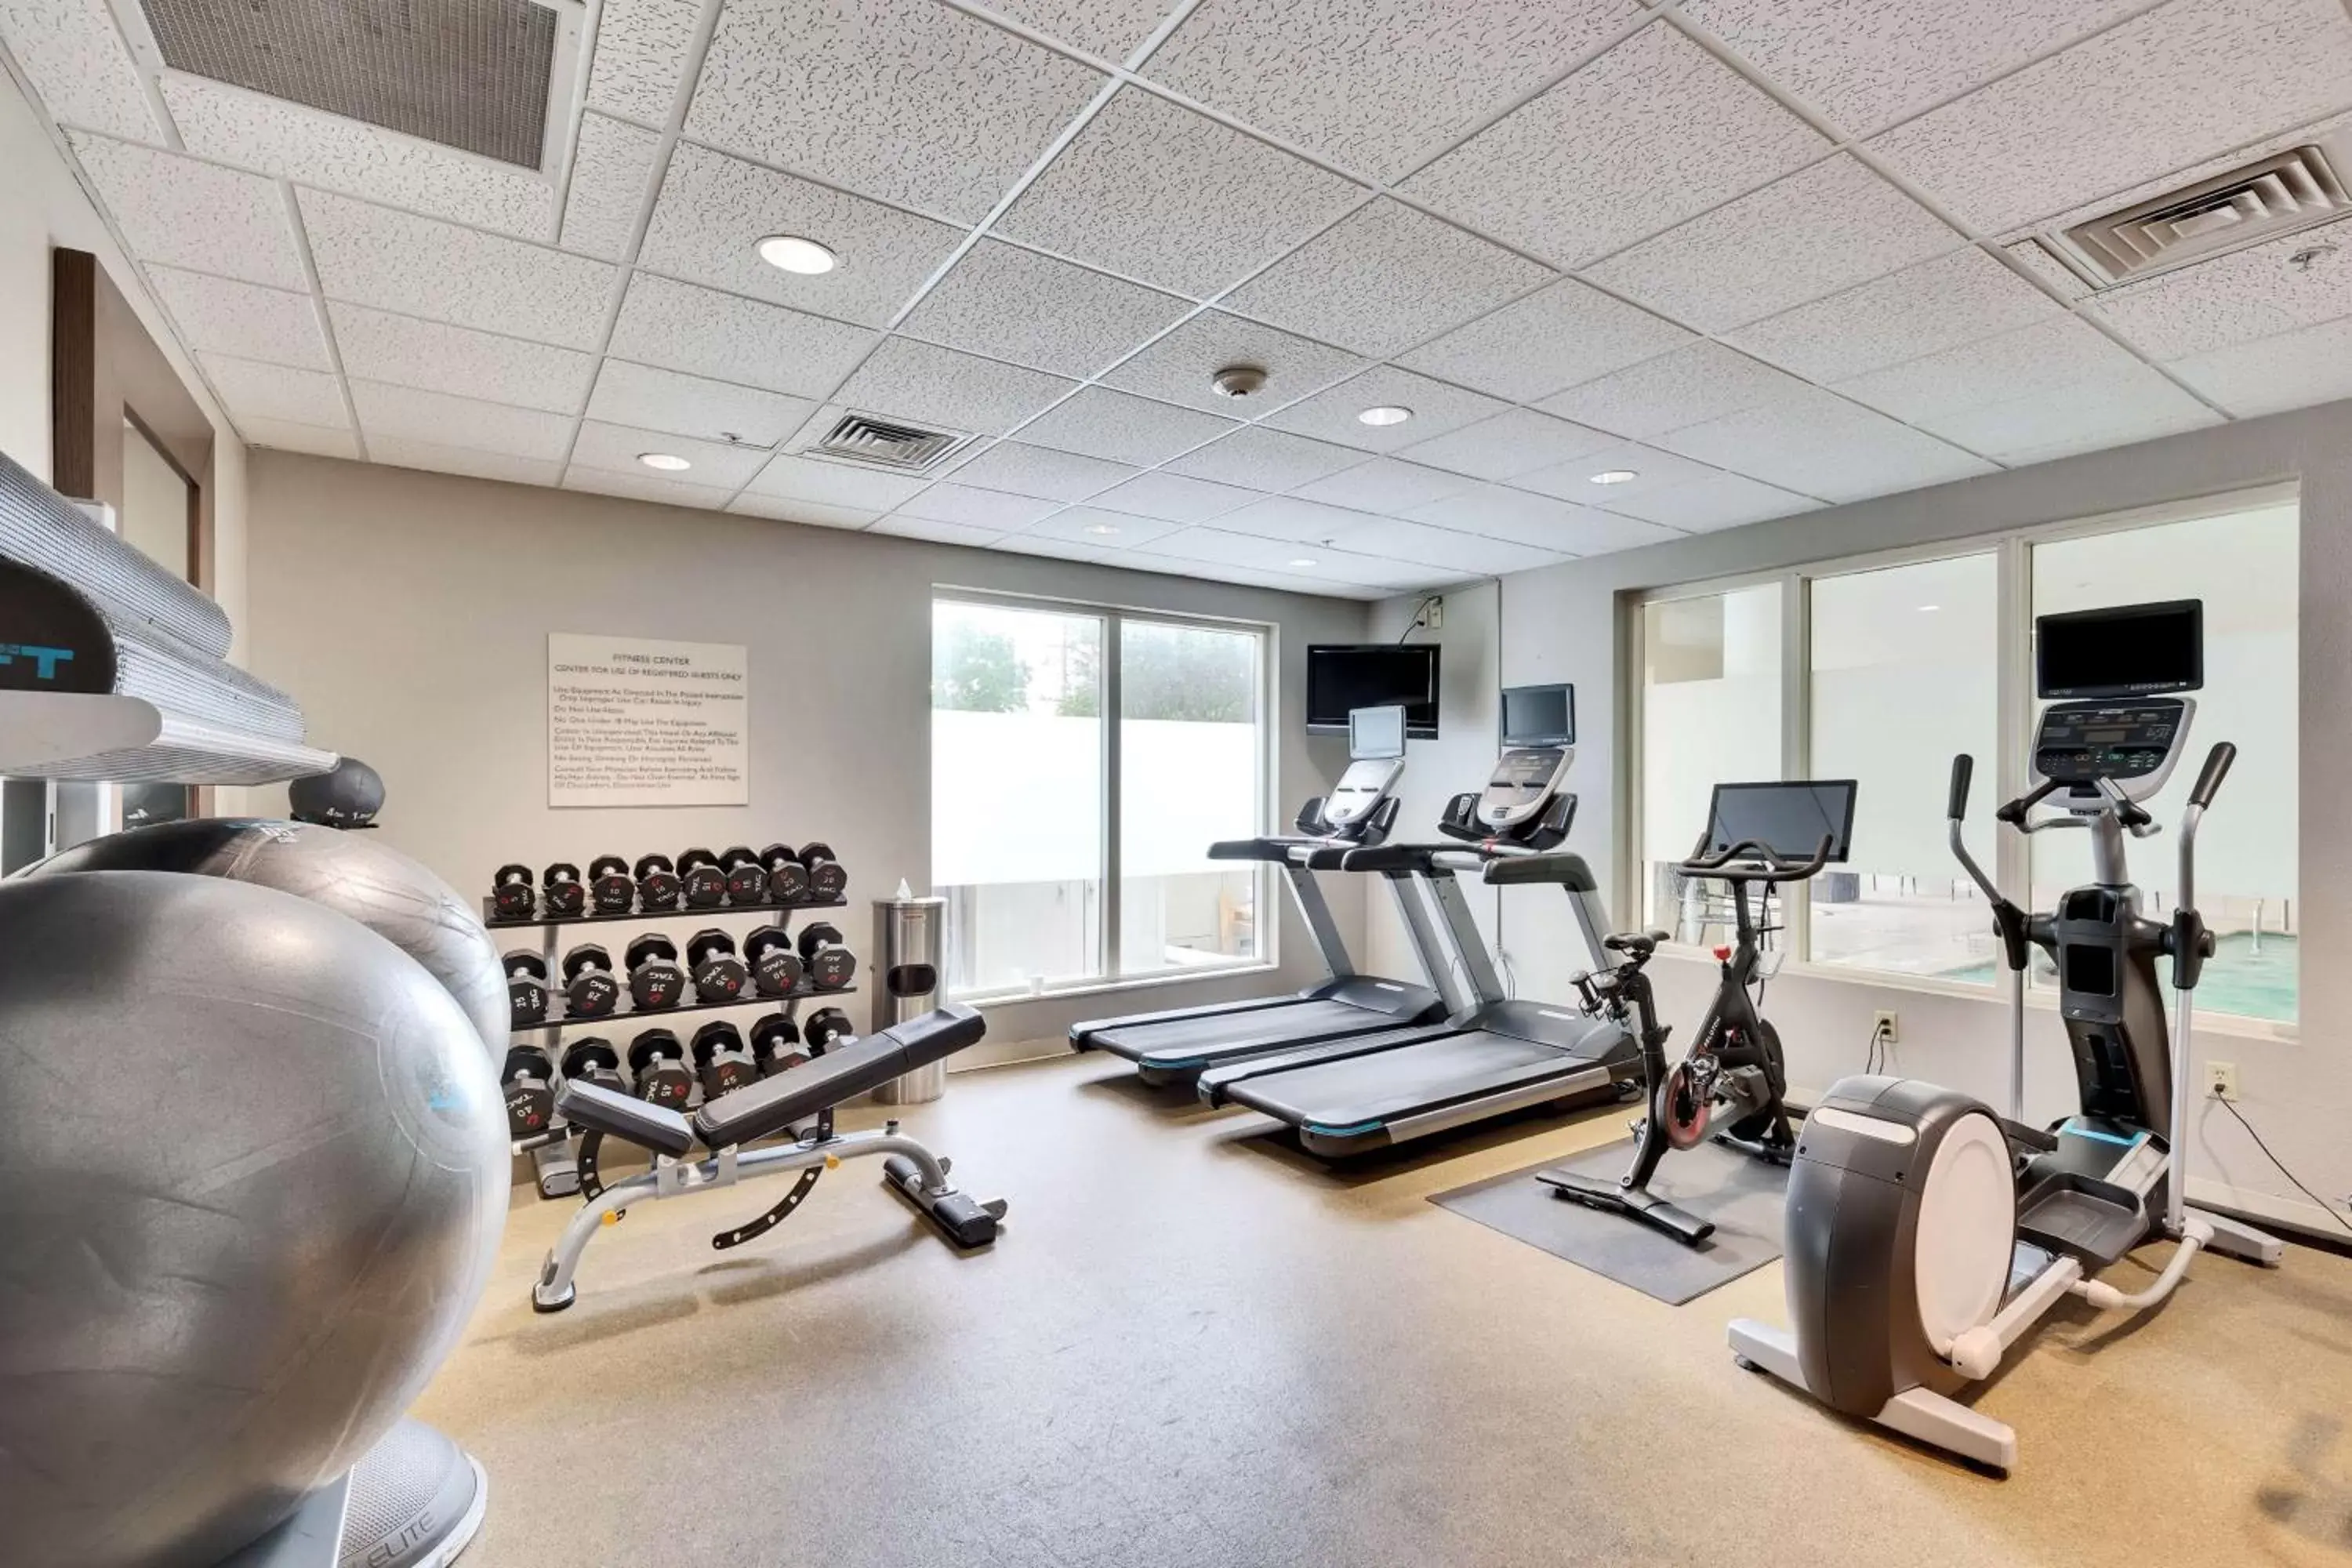 Fitness centre/facilities, Fitness Center/Facilities in Hilton Garden Inn Austin NorthWest/Arboretum